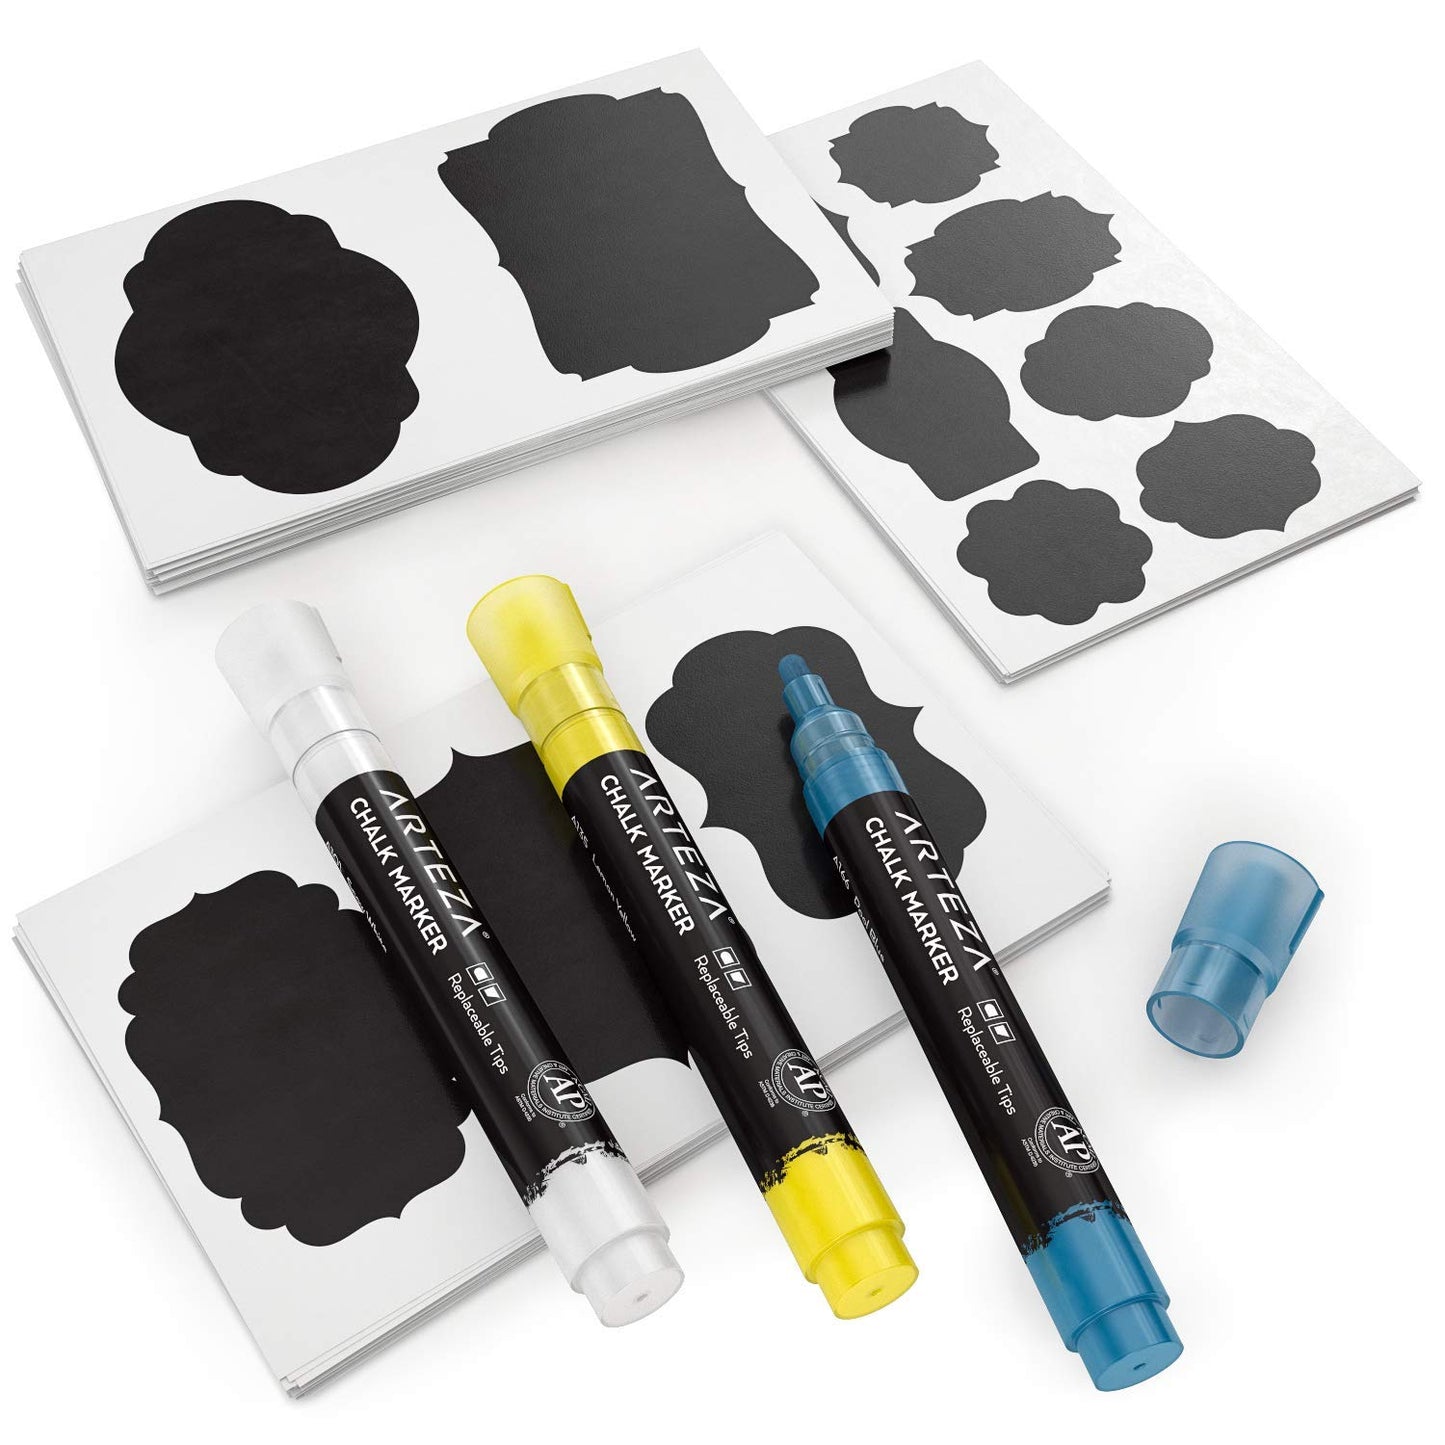 Arteza Chalkboard Markers & Sticker Sets - Colors